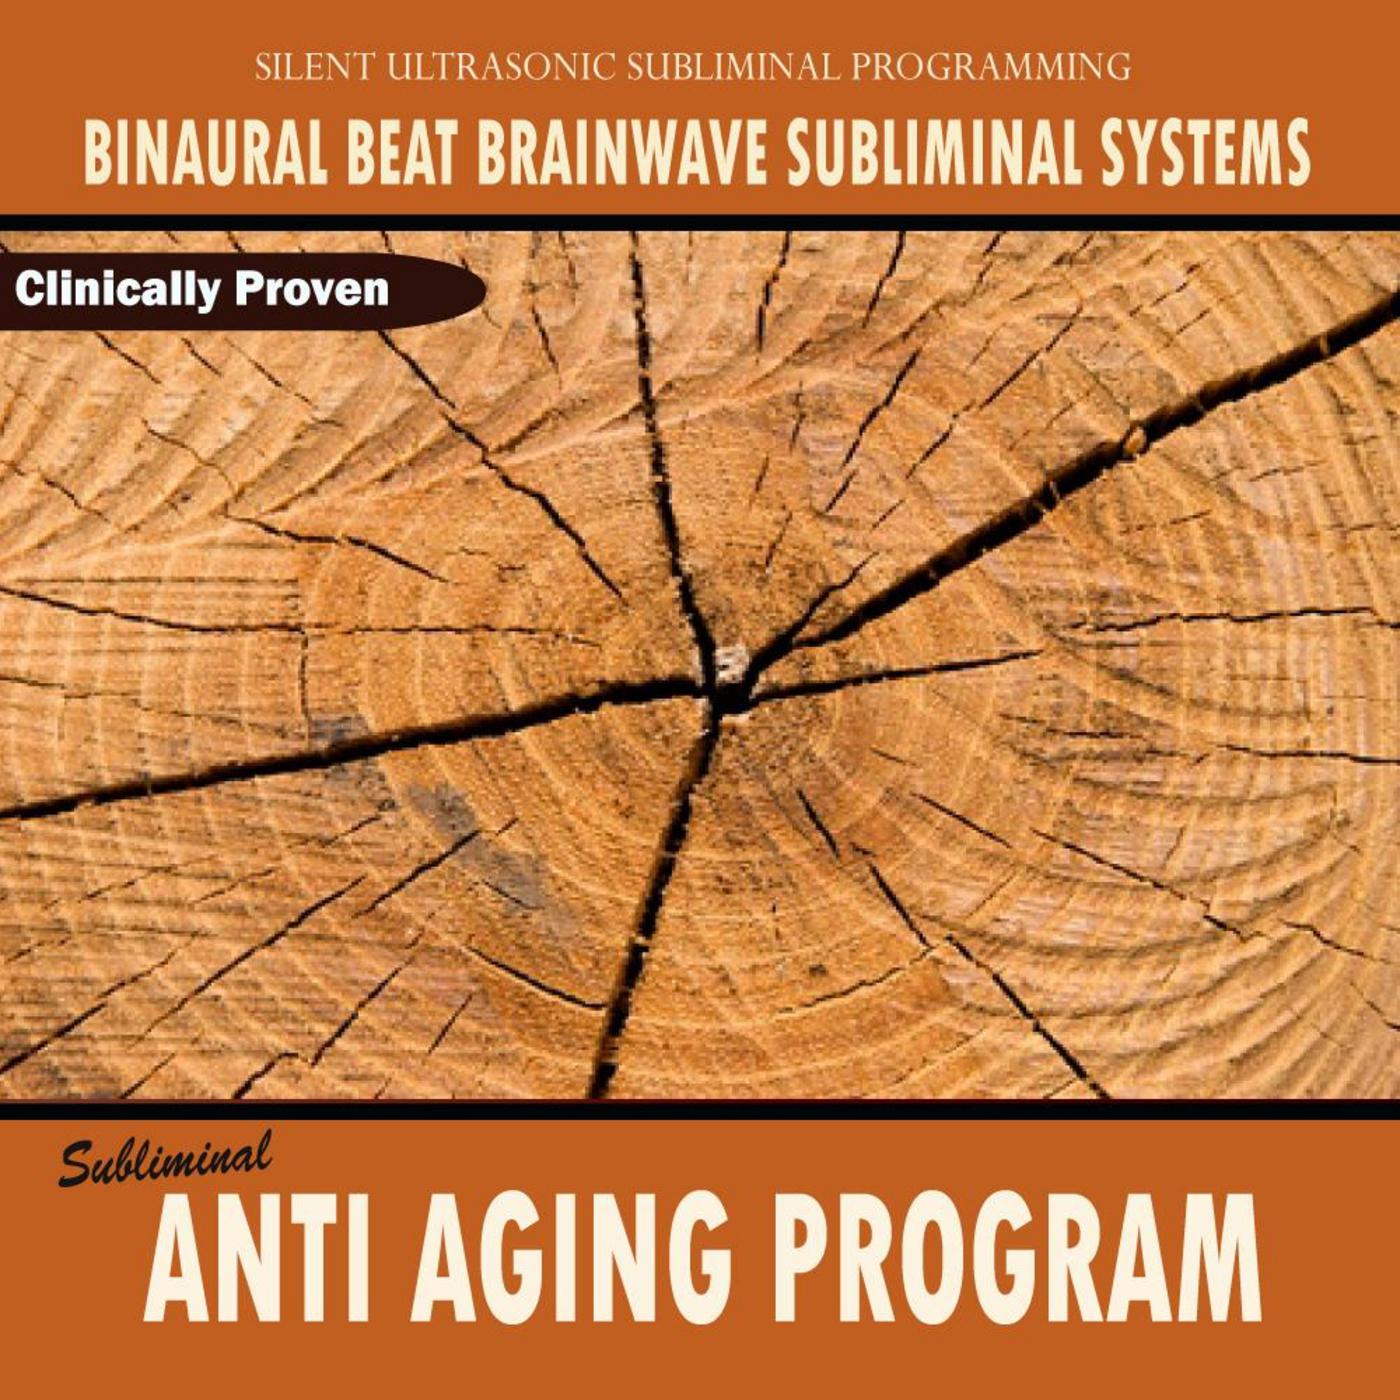 Subliminal Anti Aging Program - Binaural Beat Brainwave Subliminal Systems